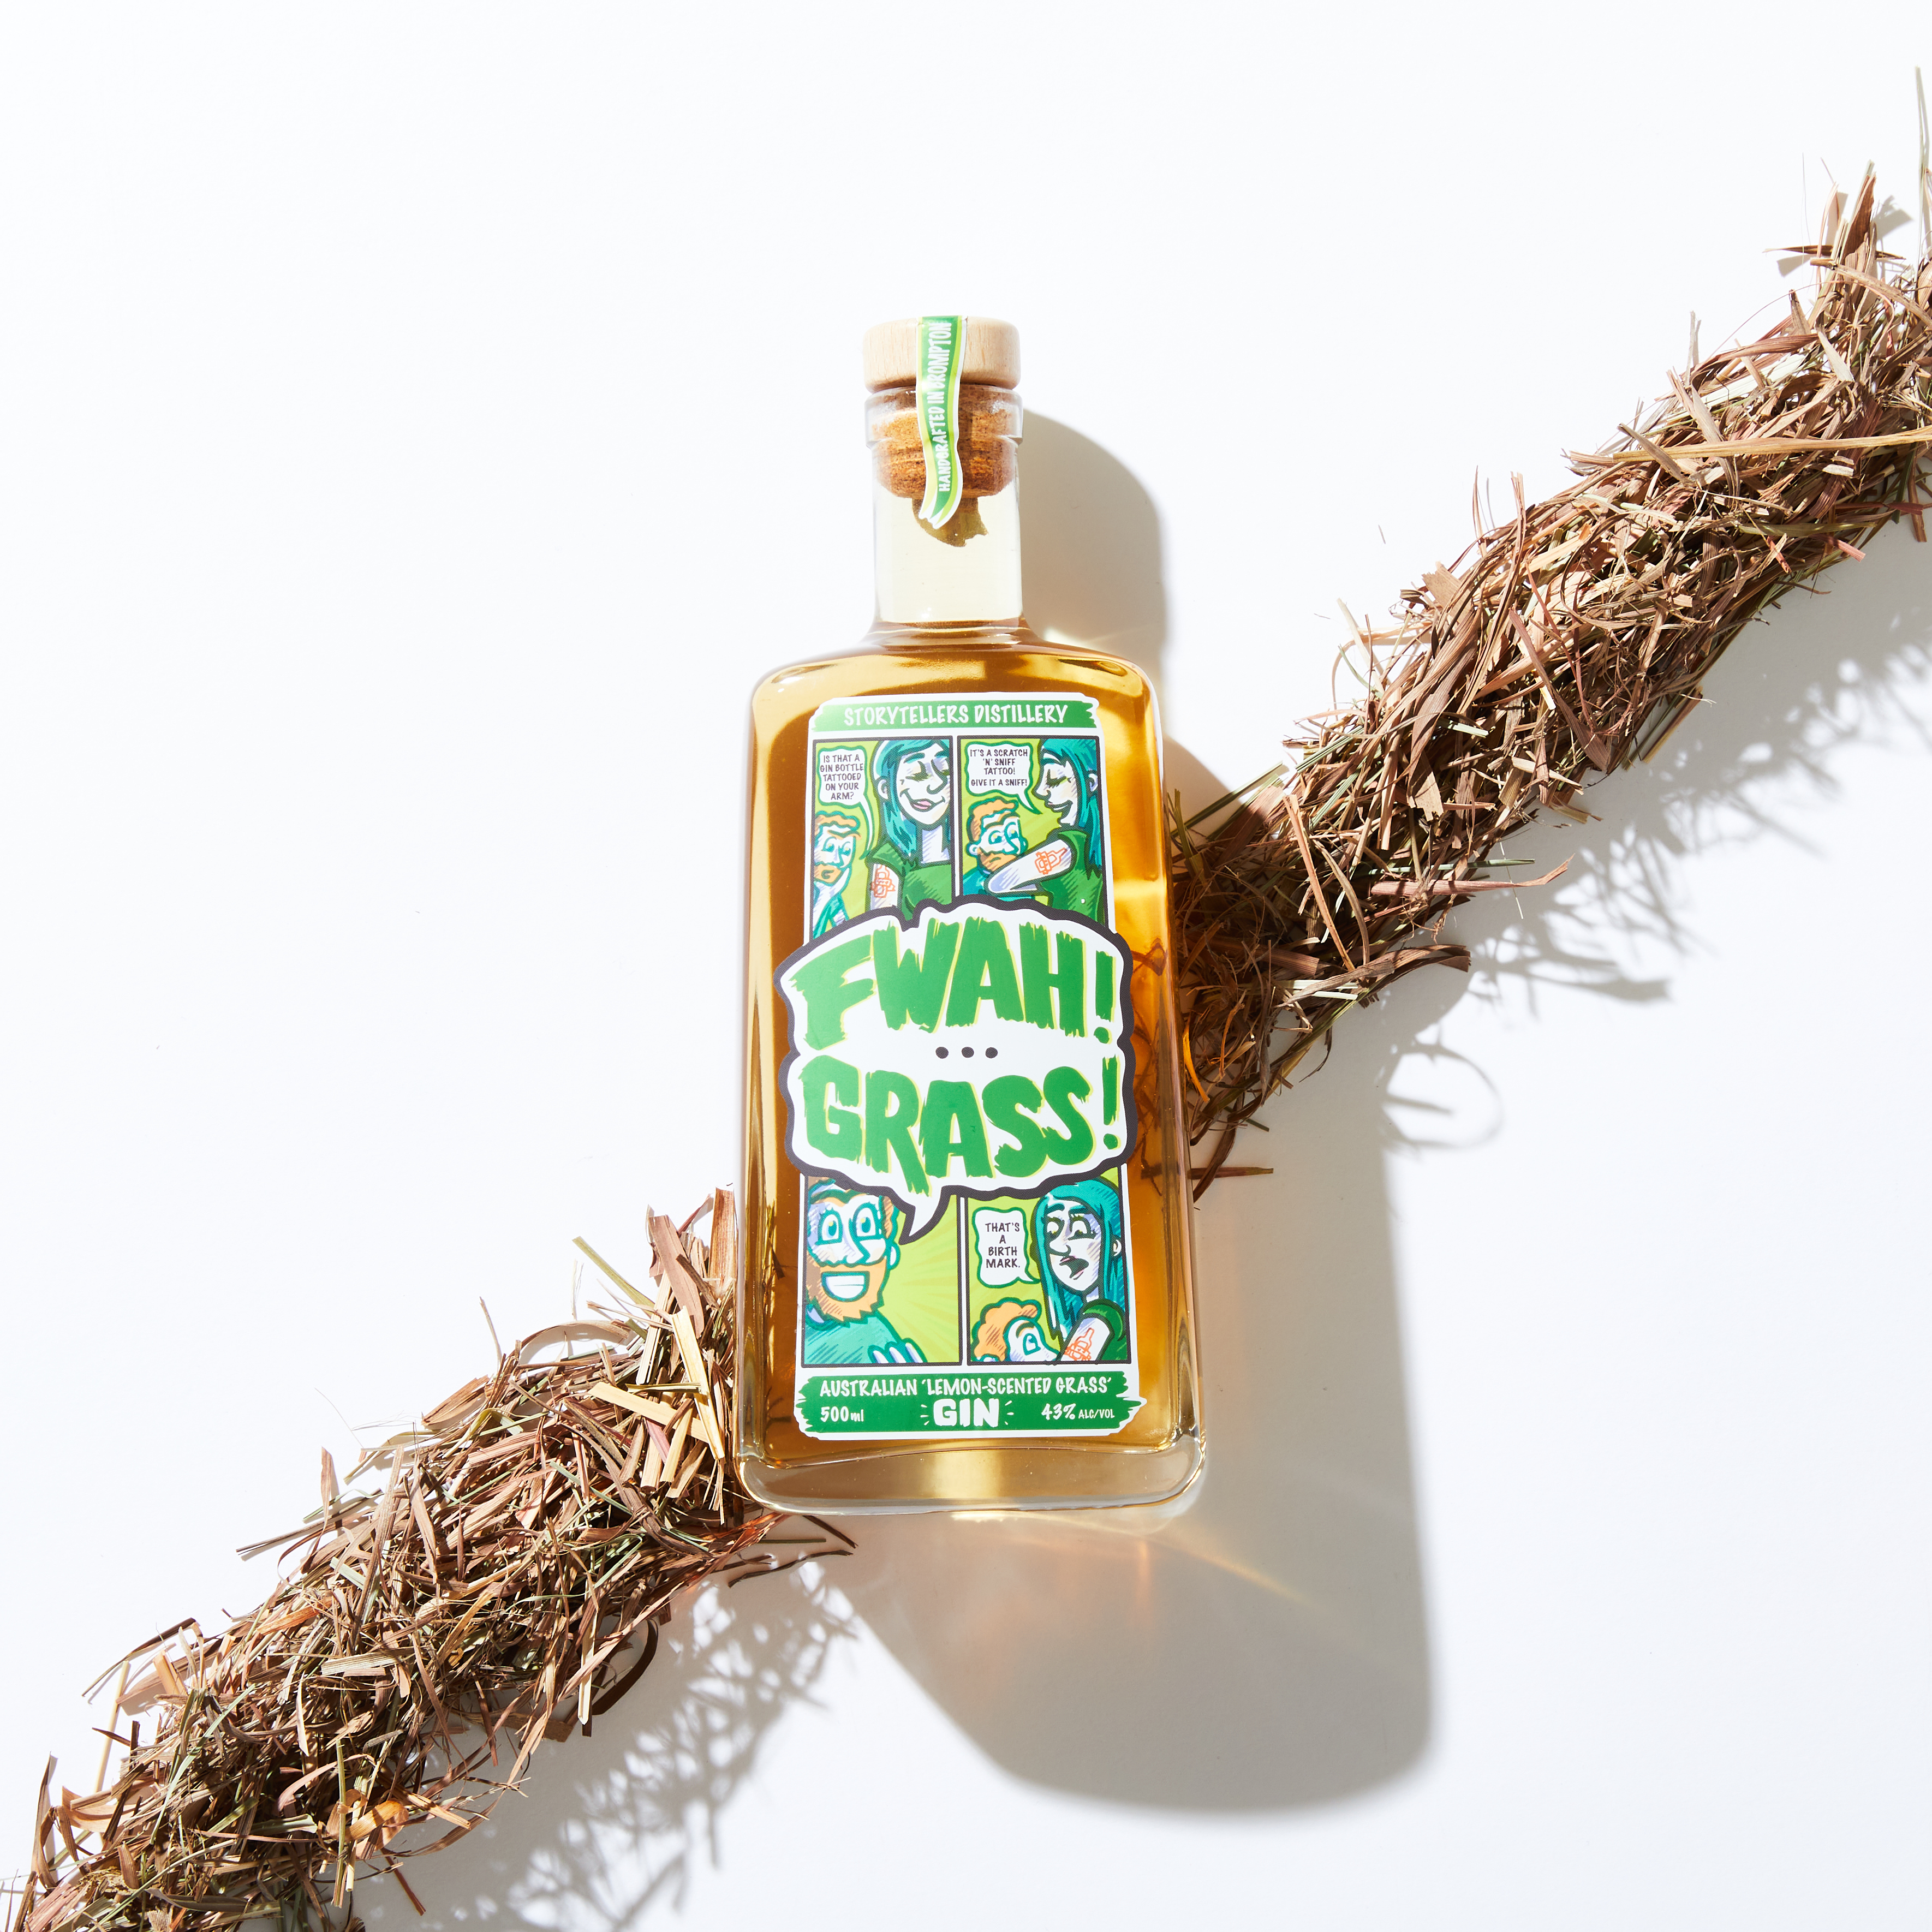 FWAH! GRASS! Lemon-Scented Grass Gin Image 2